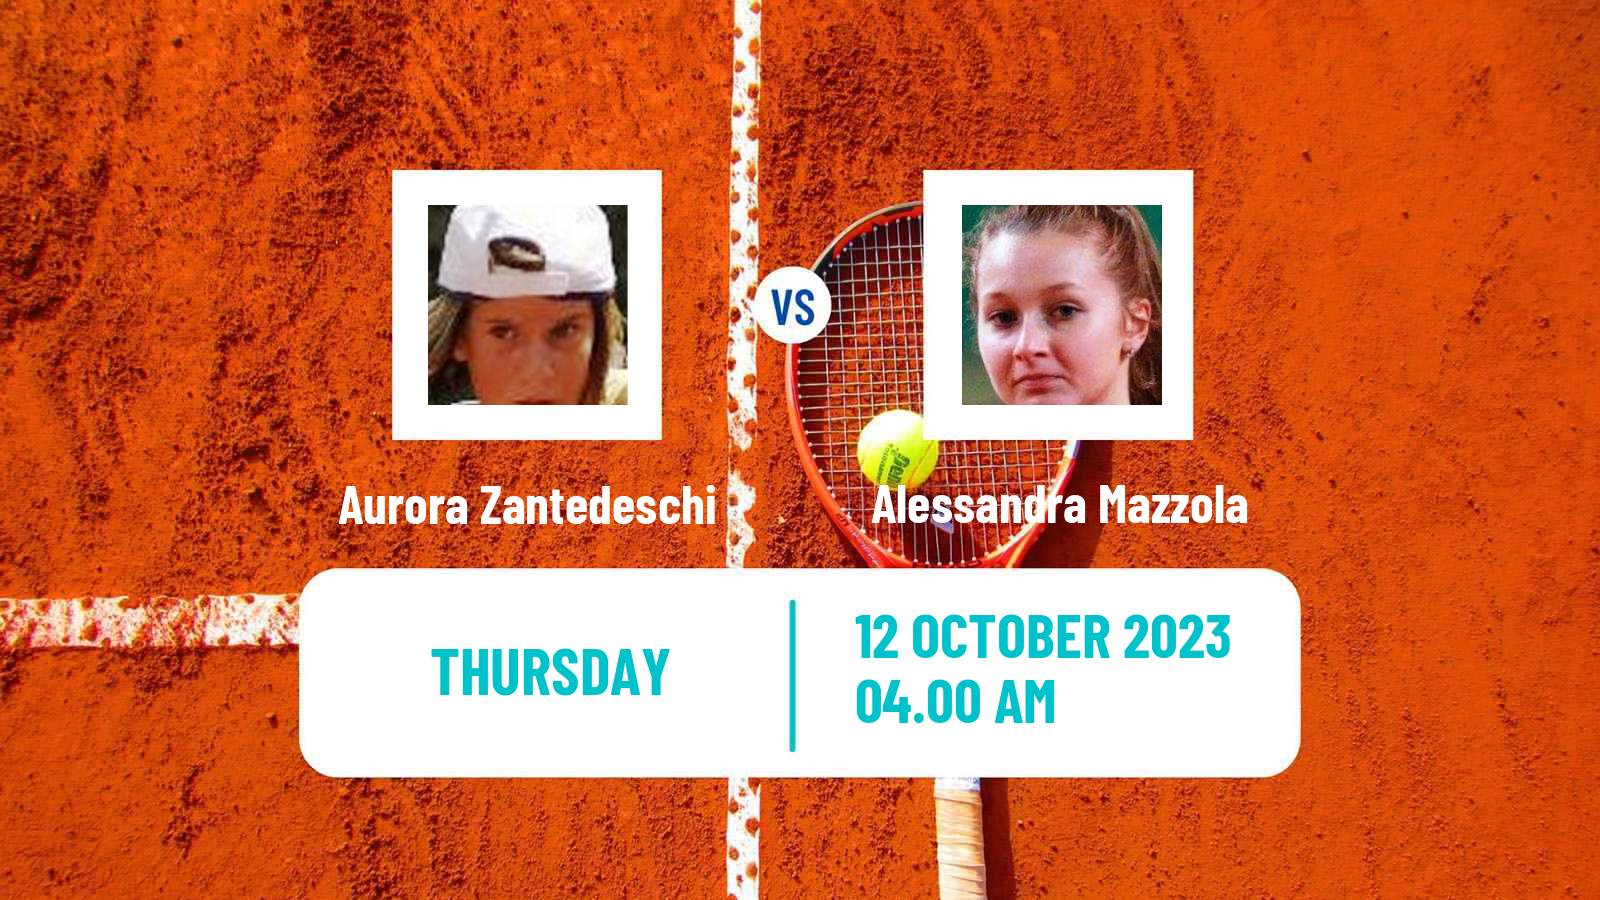 Tennis ITF W25 Santa Margherita Di Pula 9 Women Aurora Zantedeschi - Alessandra Mazzola